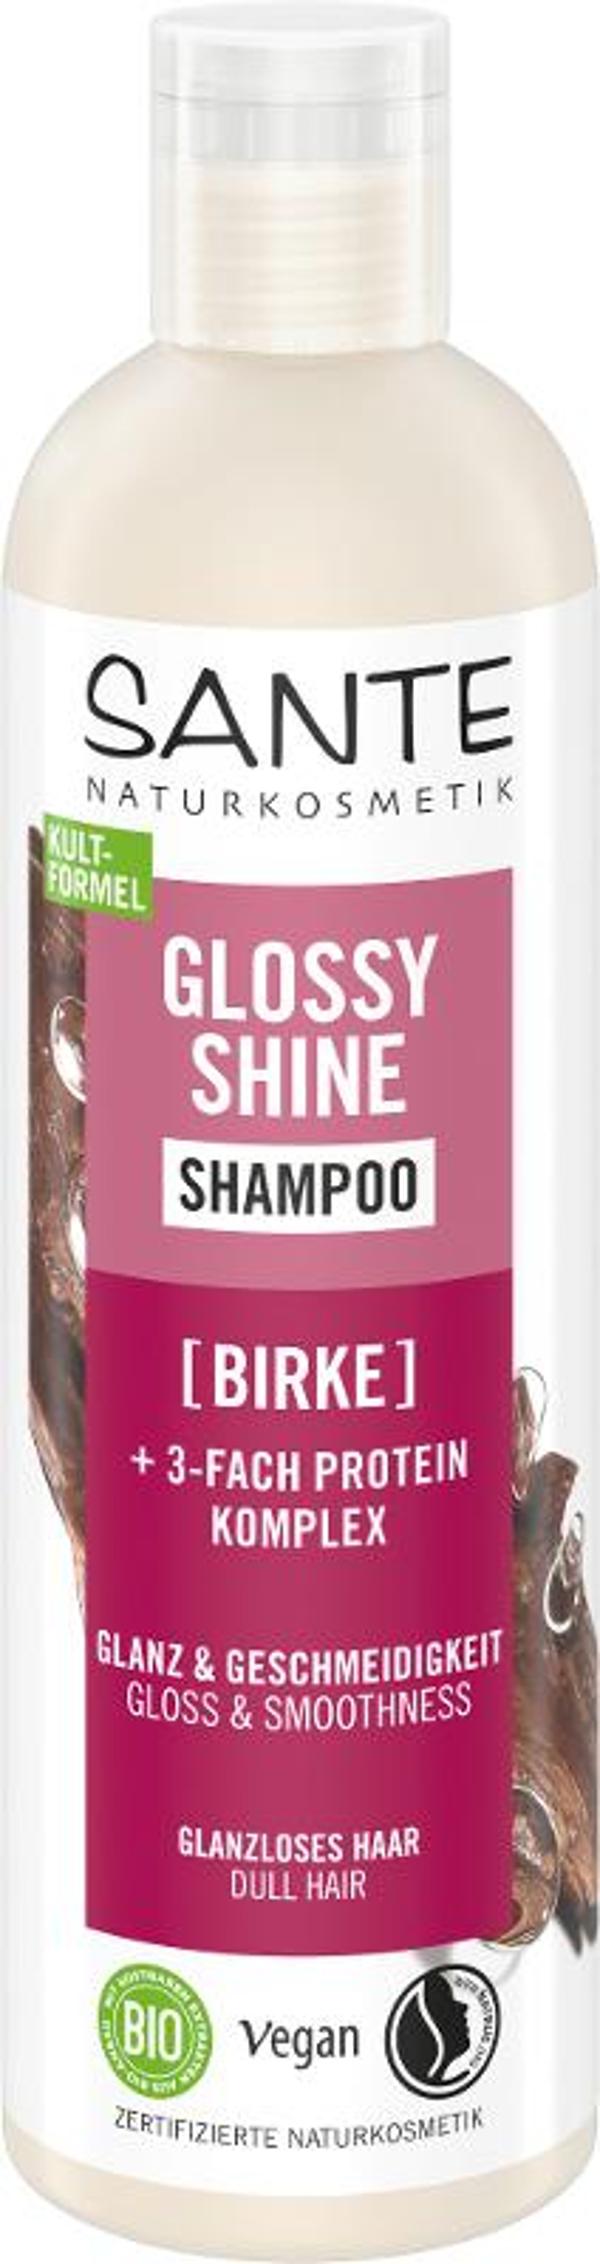 Produktfoto zu Glossy Shine Shampoo Birke